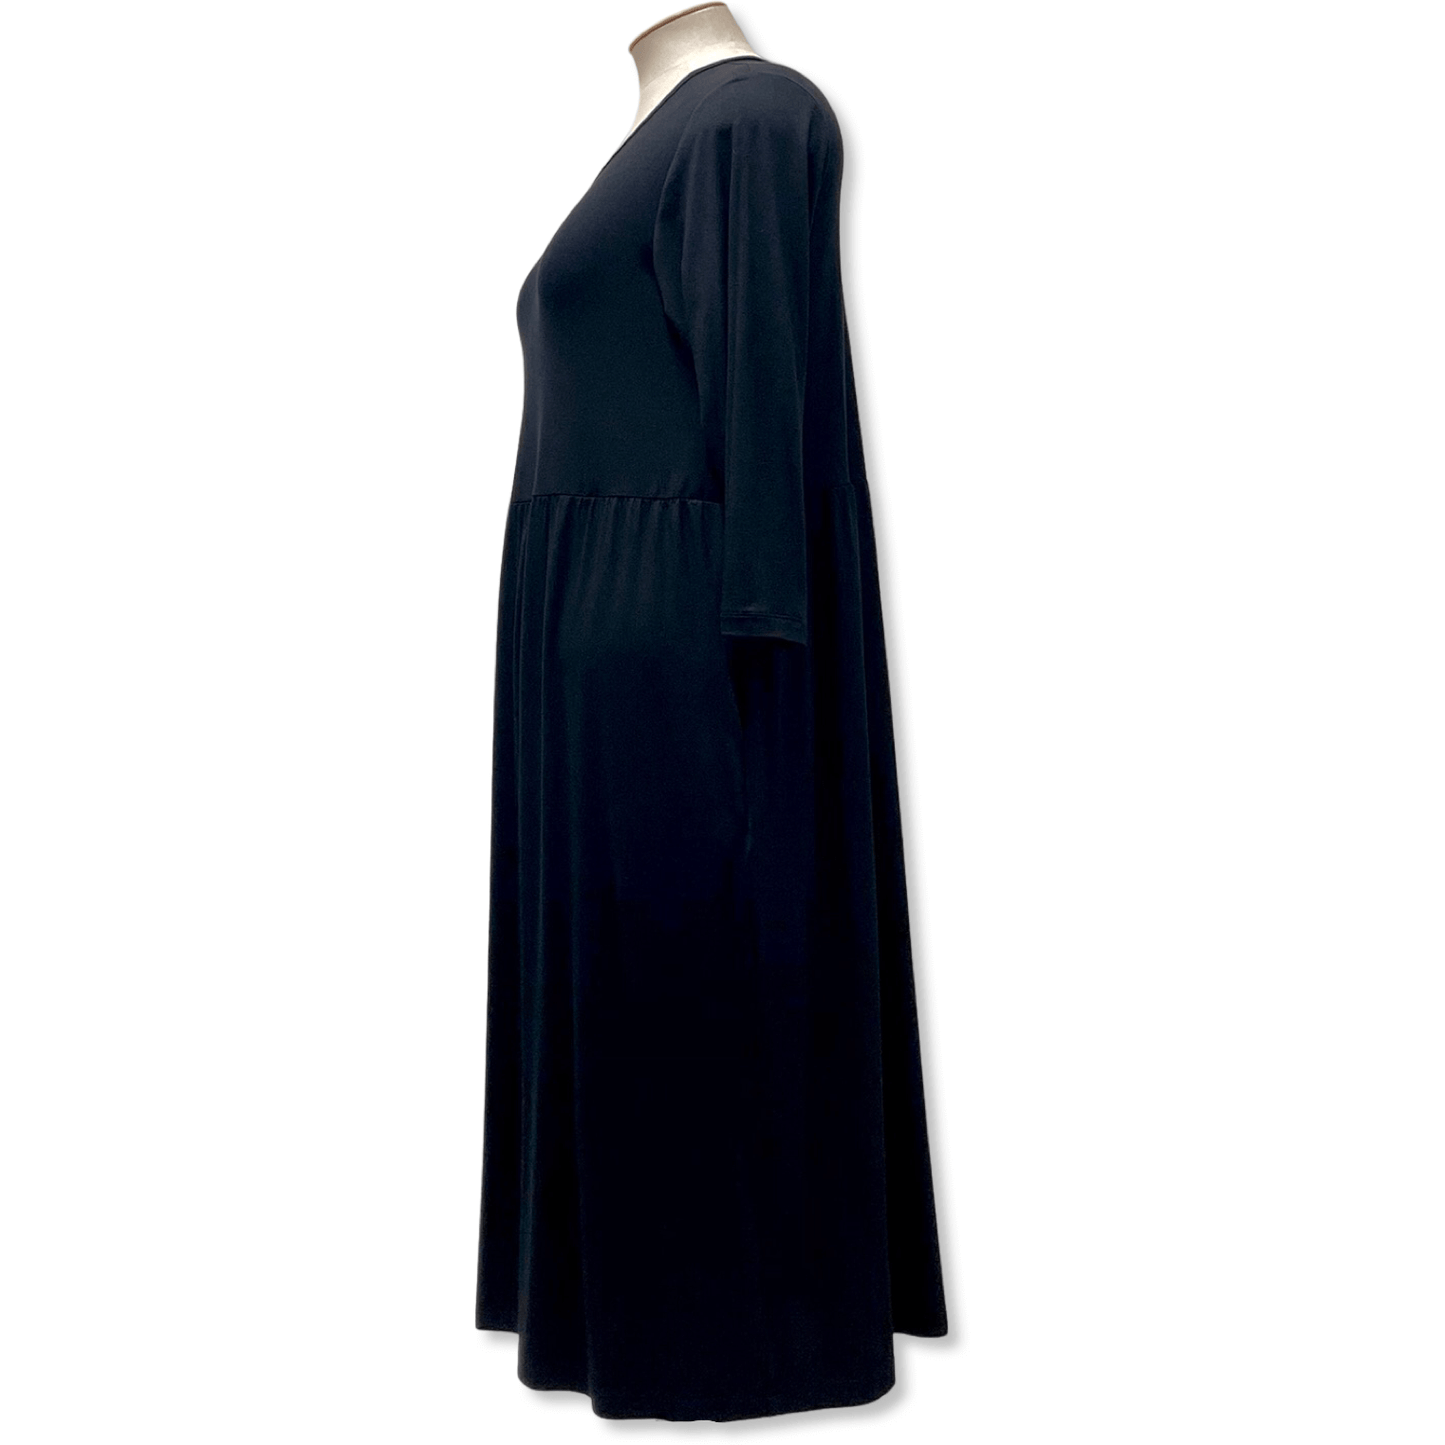 Bloom Clothing NZ,ALL DAY CUDDLES DRESS -Black,$90.00,